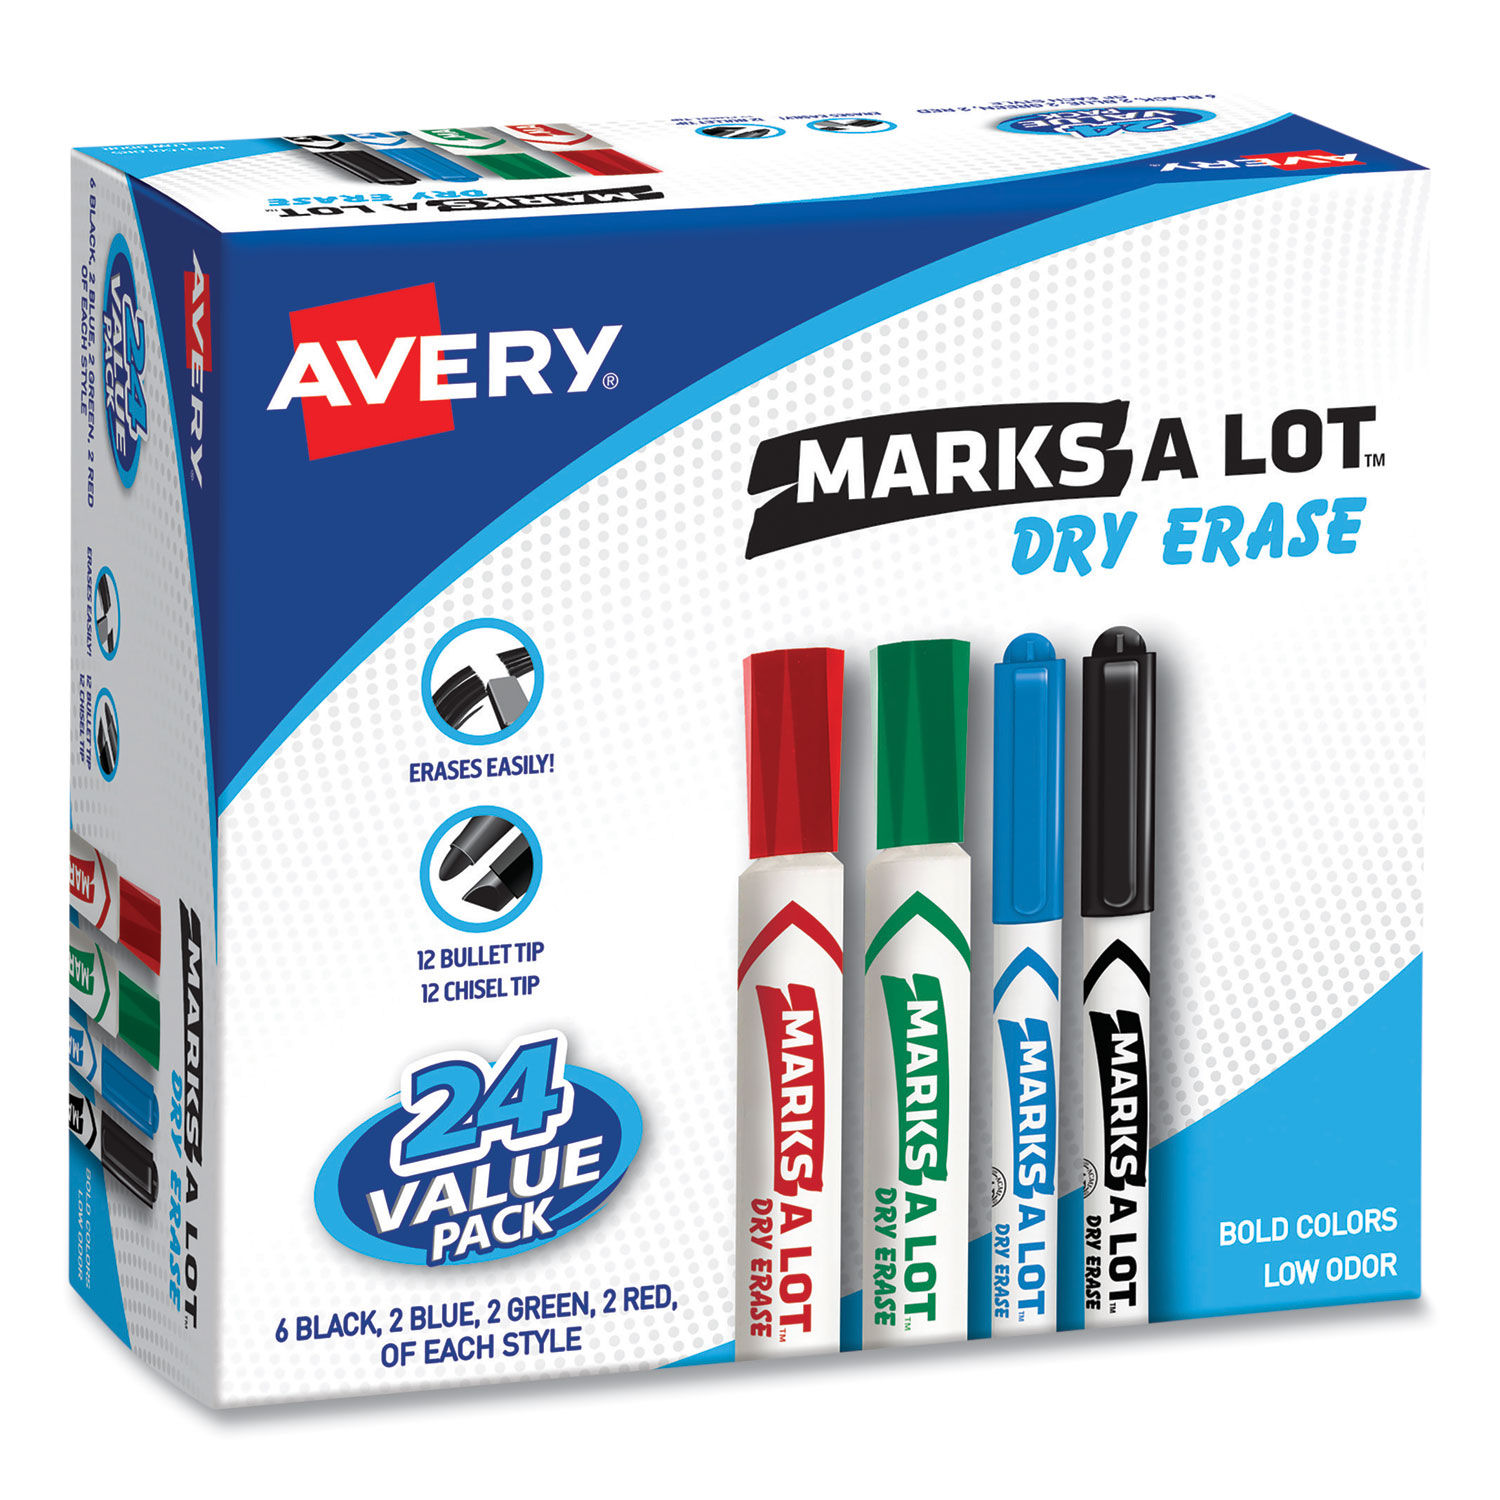 MARKS A LOT Desk/Pen-Style Dry Erase Marker Value Pack Assorted Broad Bullet/Chisel Tips, Assorted Colors, 24/Pack (29870)